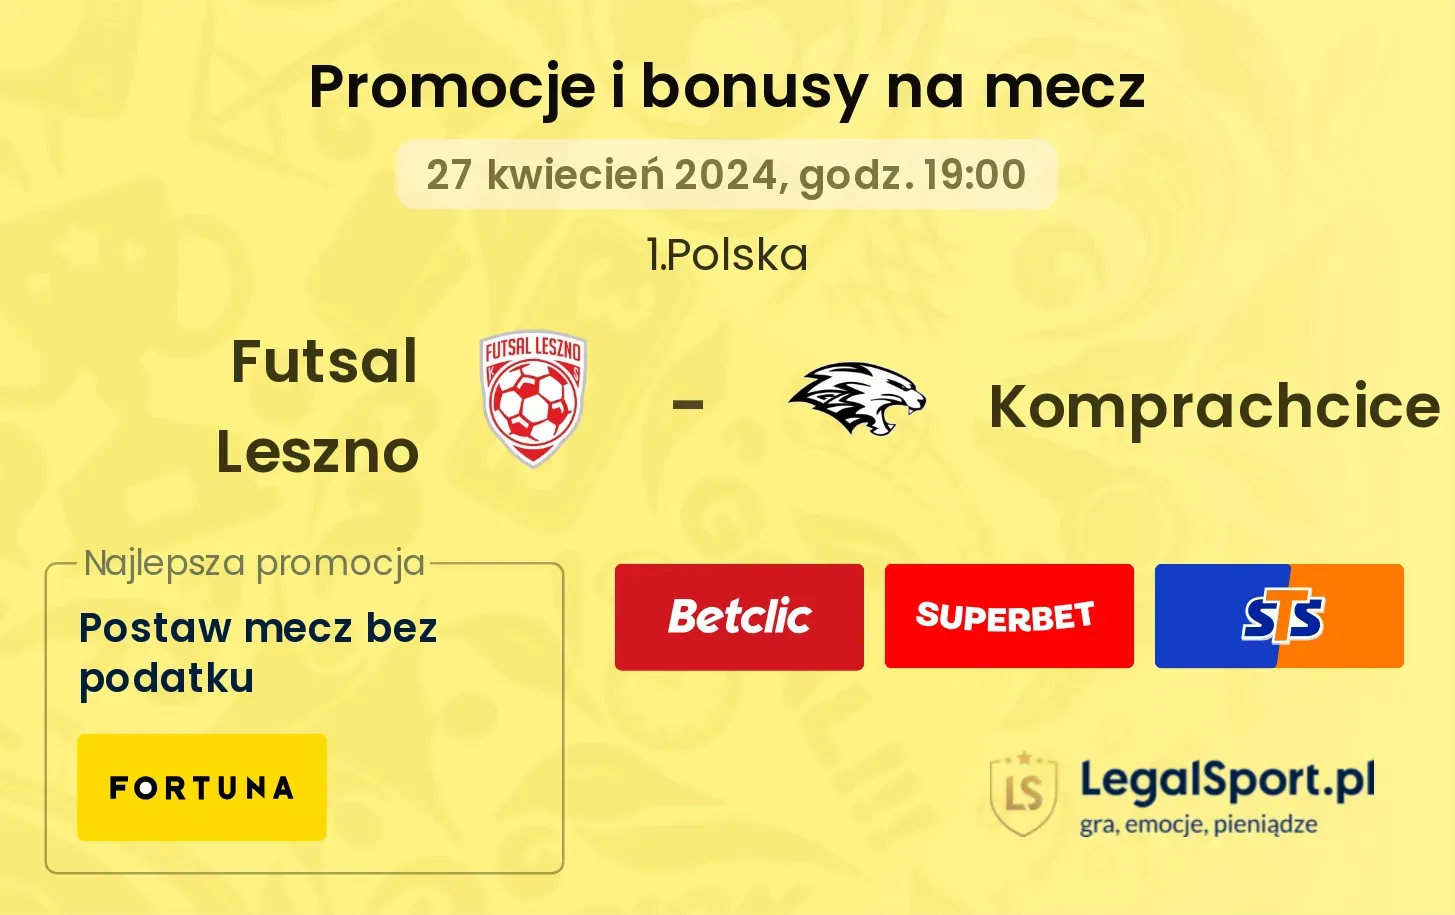 Futsal Leszno - Komprachcice promocje bonusy na mecz